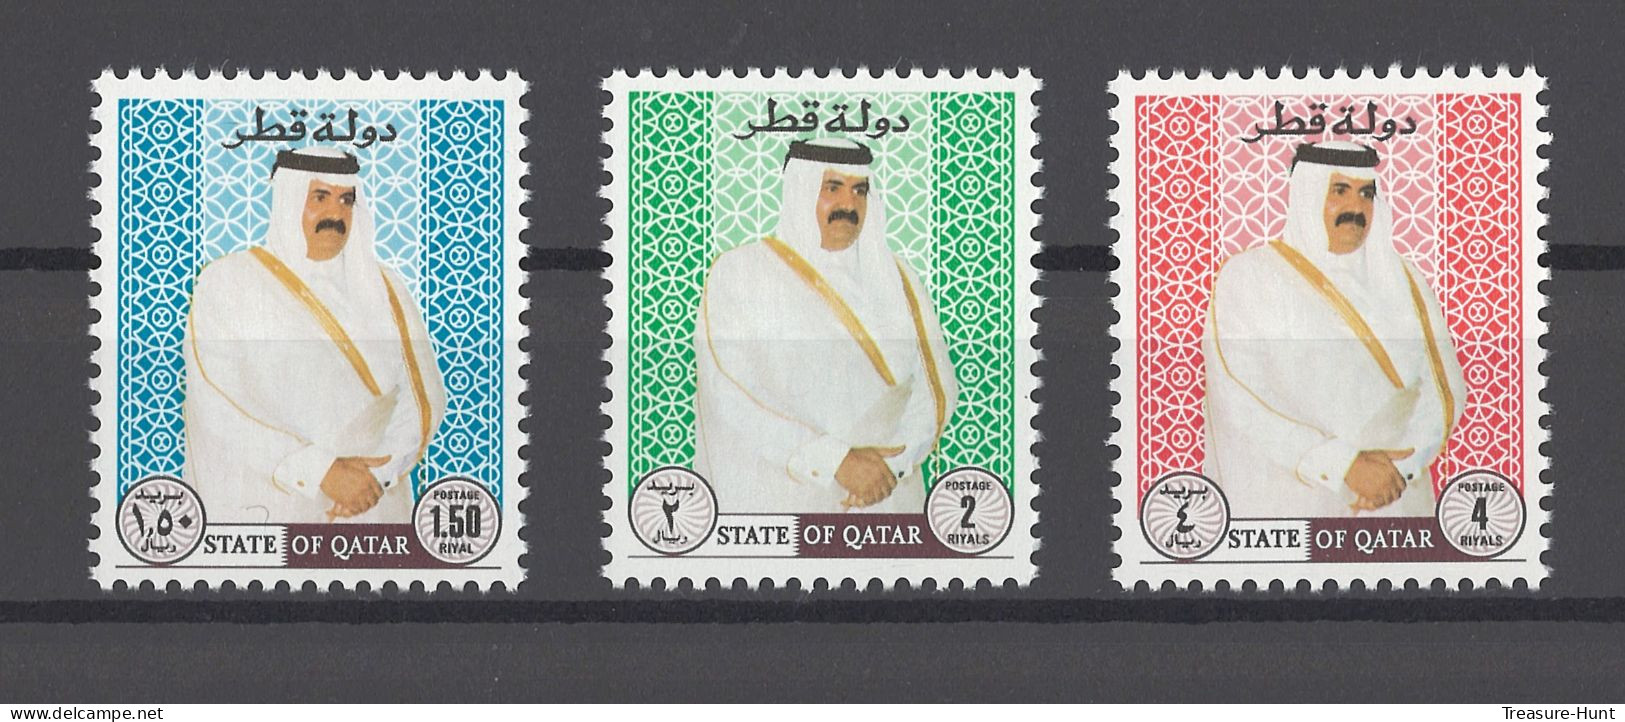 Rare Unlisted Variety Of Qatar Stamps, Facing Right Side, Father Amir Sheikh Hamad Bin Khalifa Al Thani, 3 Values, MNH** - Qatar